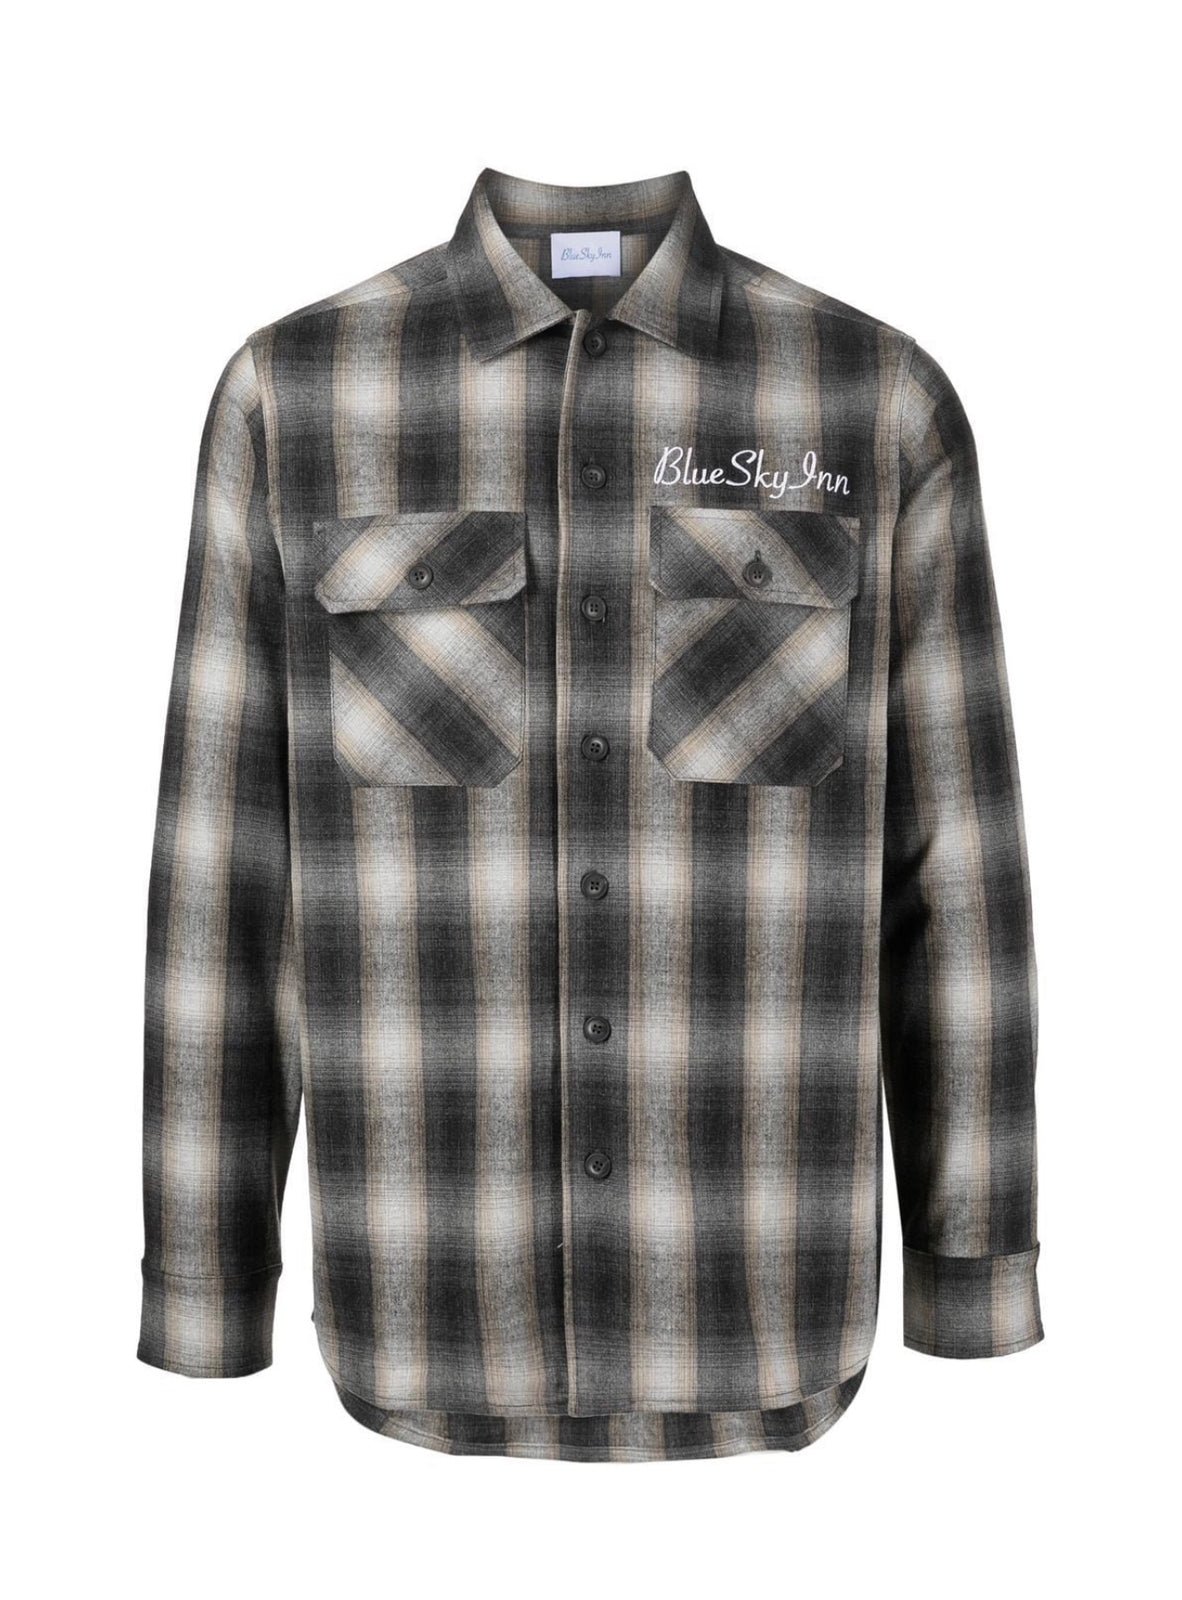 Blue Sky Inn Shirt Flannel Check Green - AL Capone PremiumClothingShirts964-19